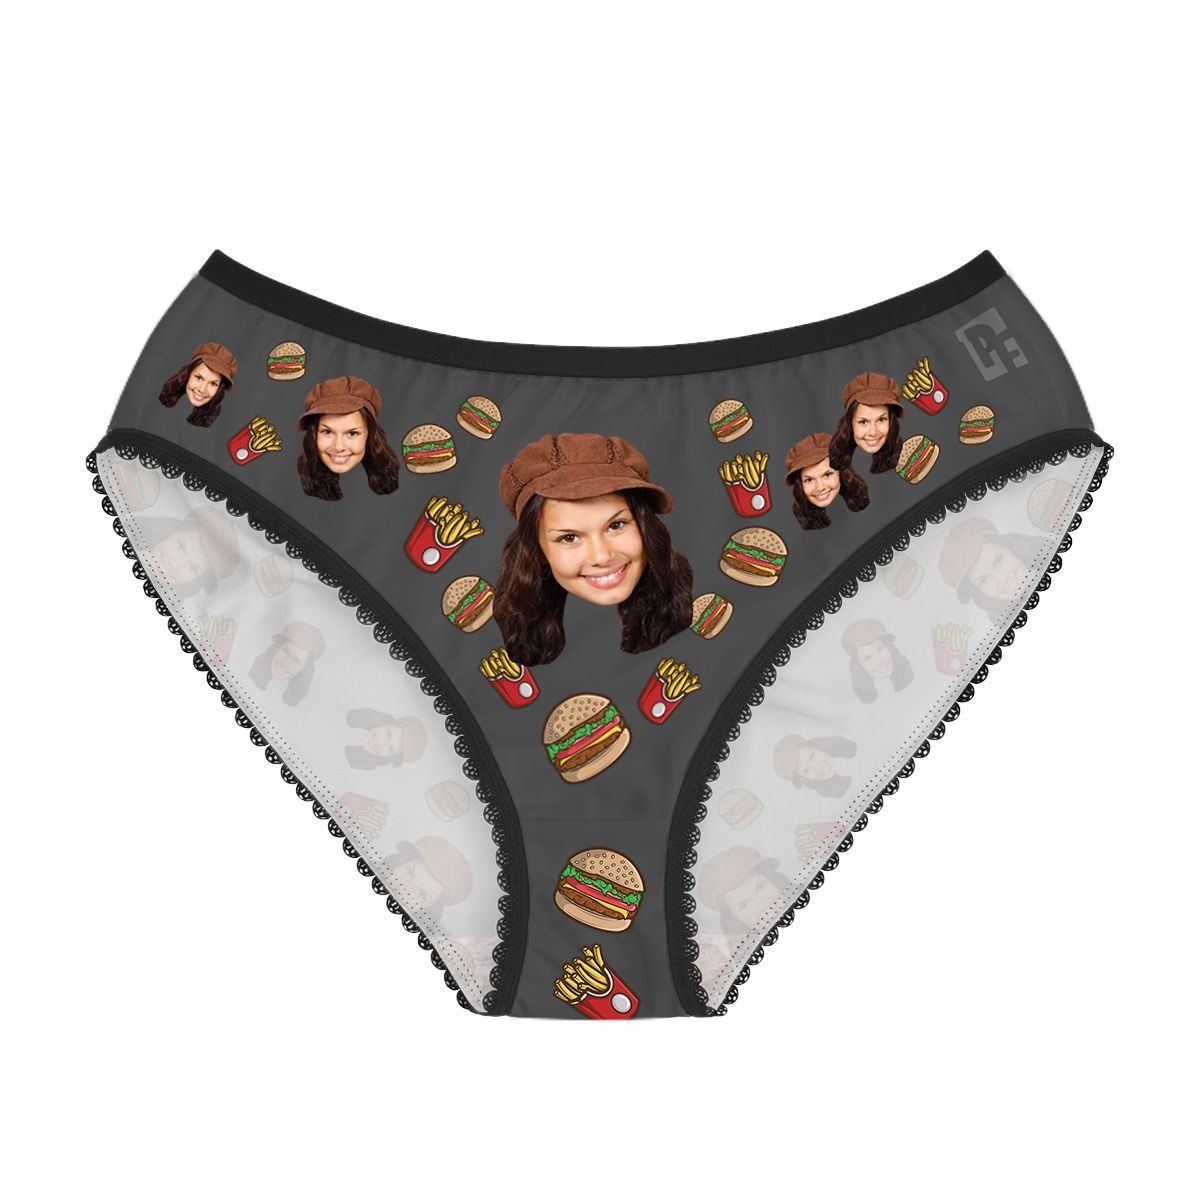 Dark Fastfood women's underwear briefs personalized with photo printed on them